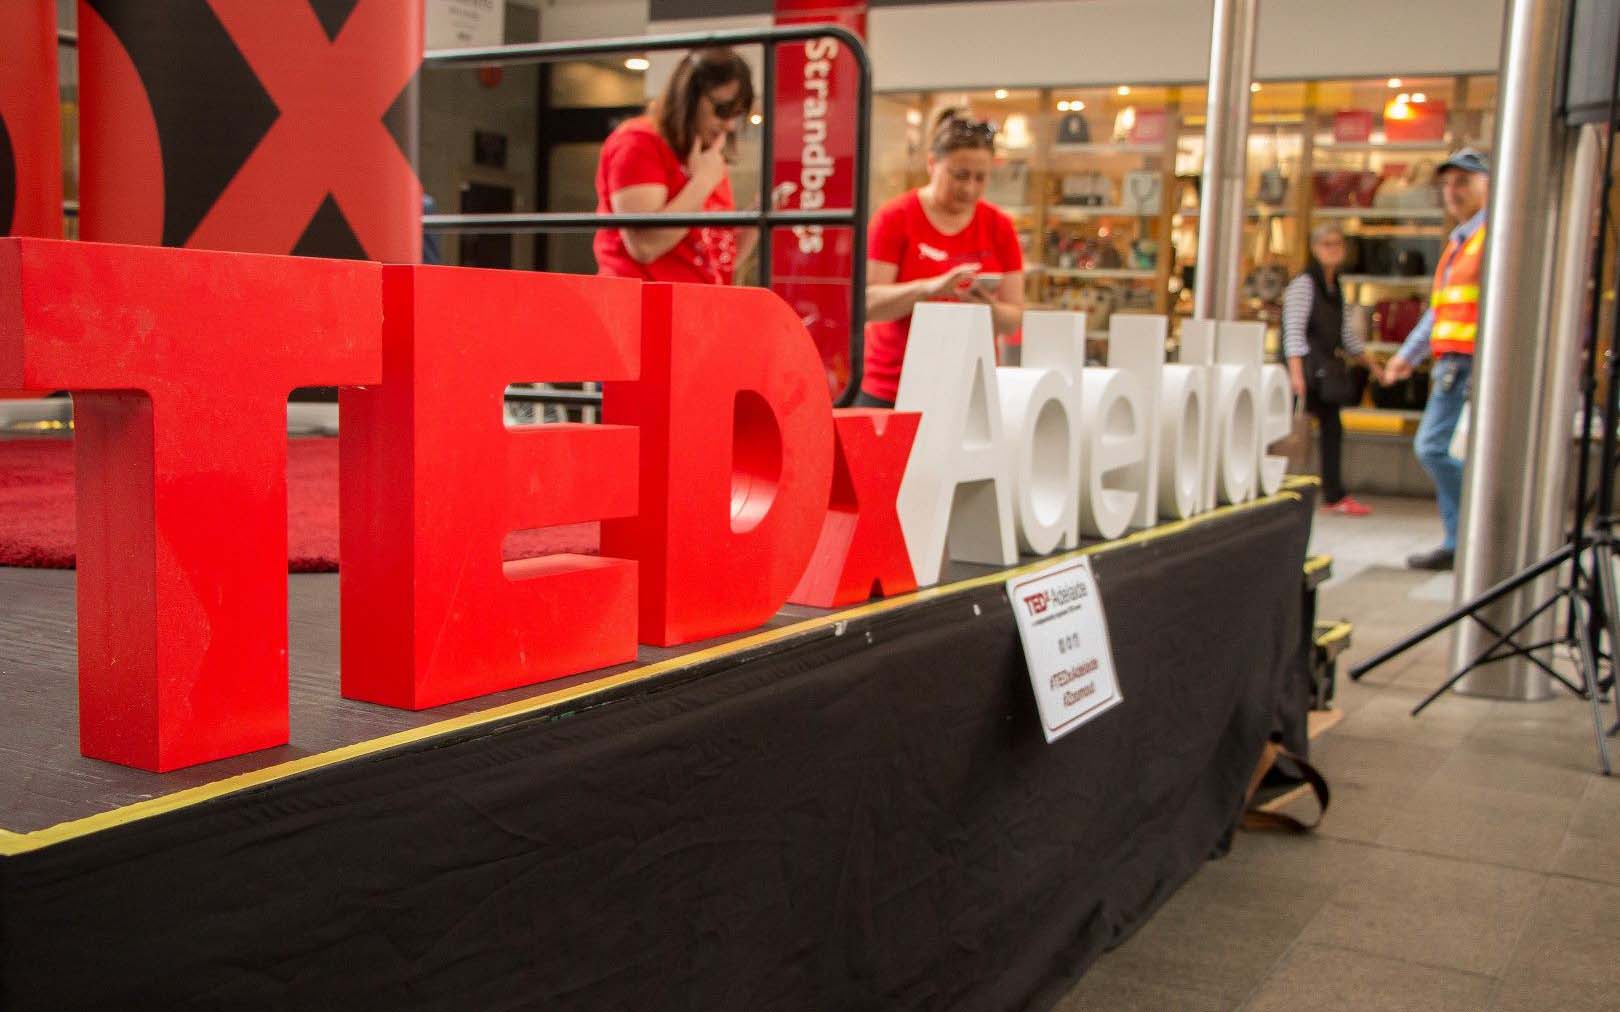 TedX Adelaide